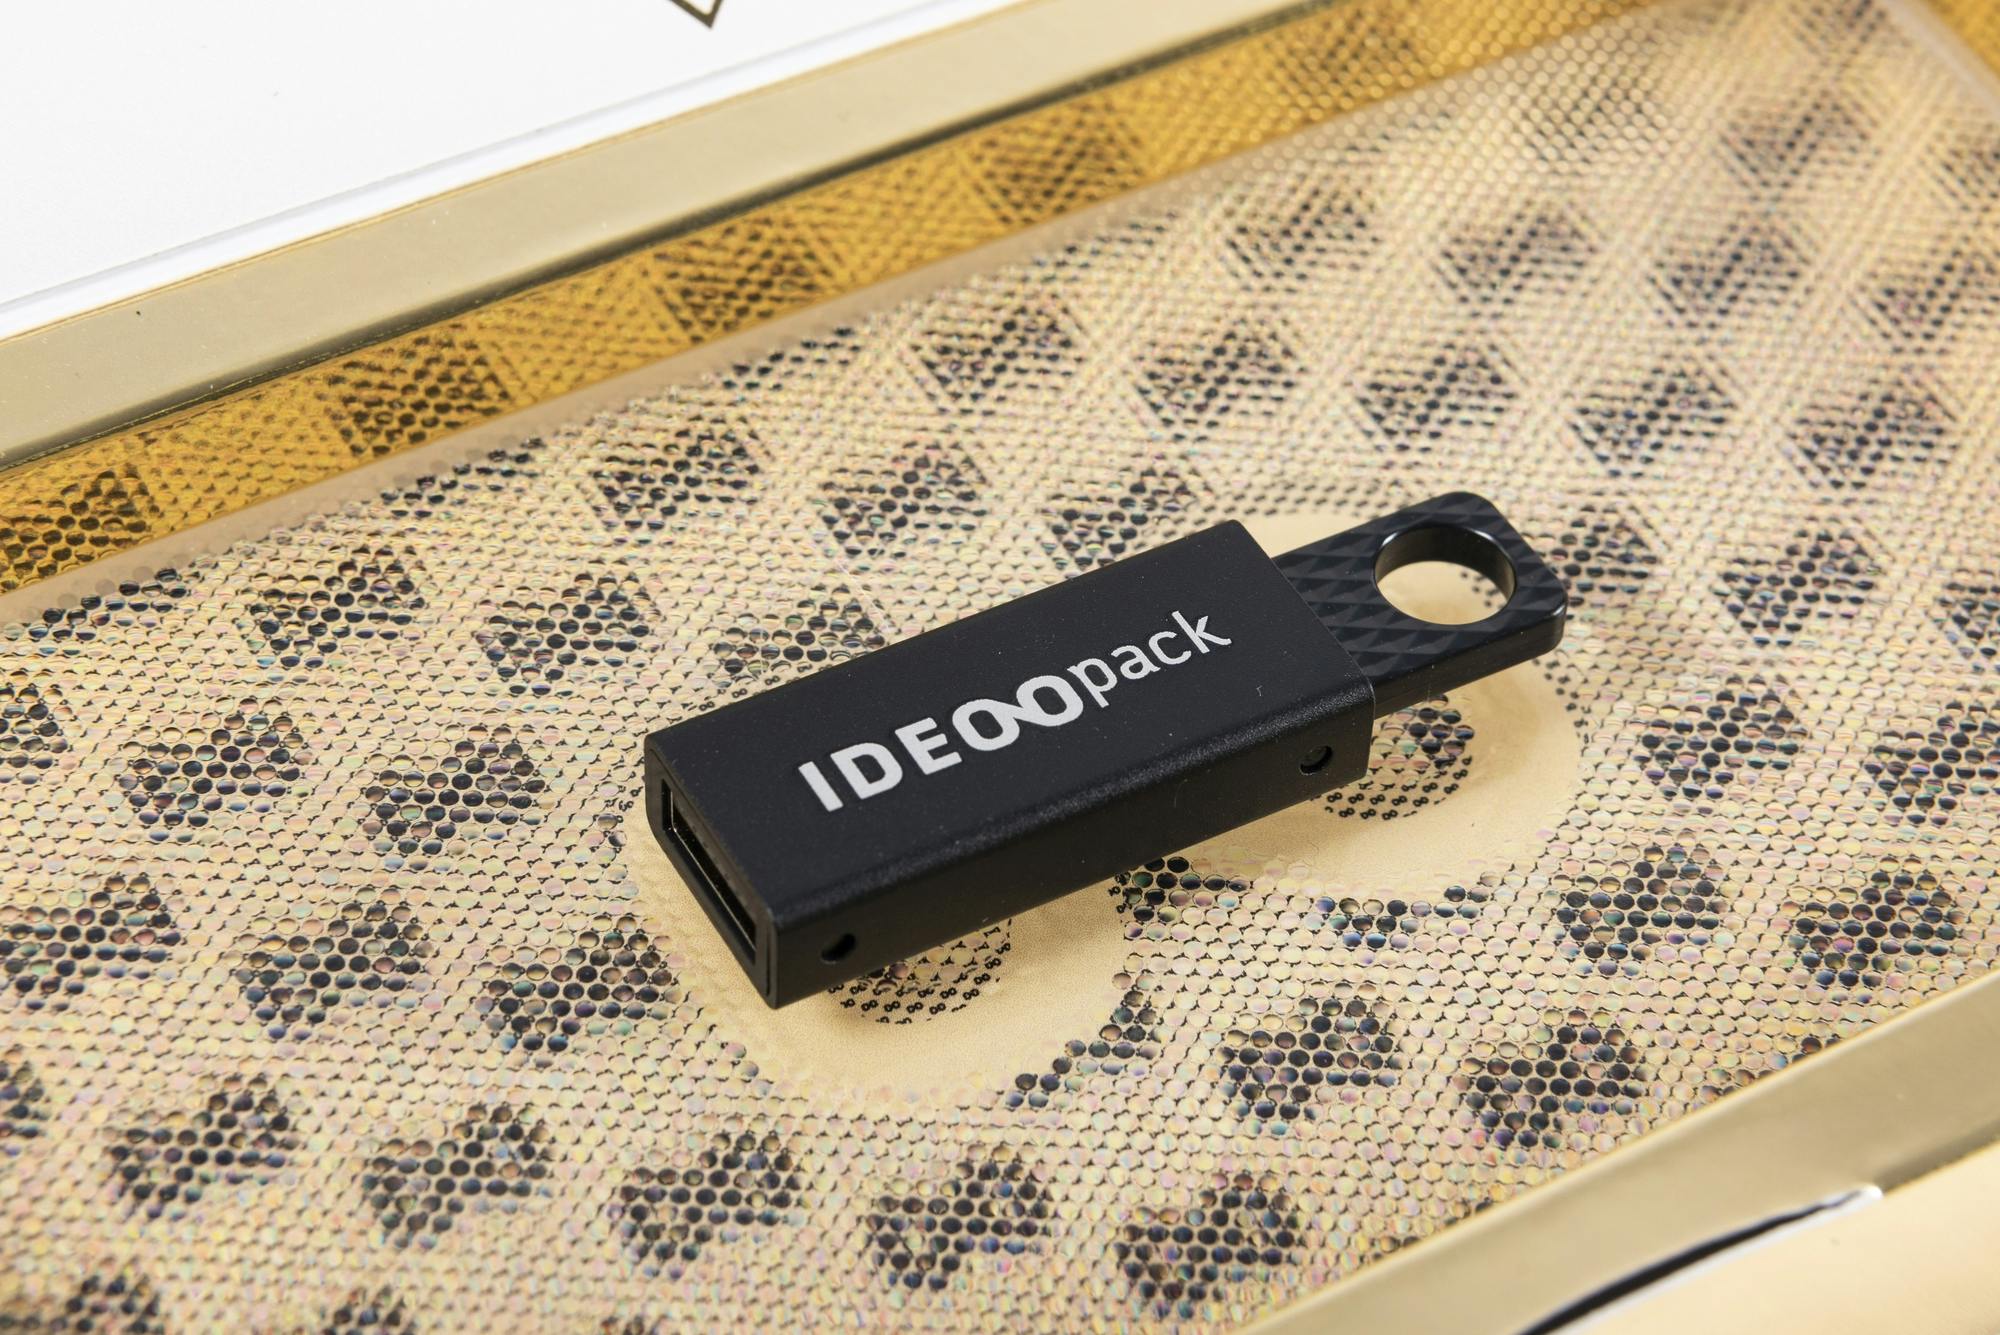 ideoopack manupacktur promotionbox Detail © swissQprint 